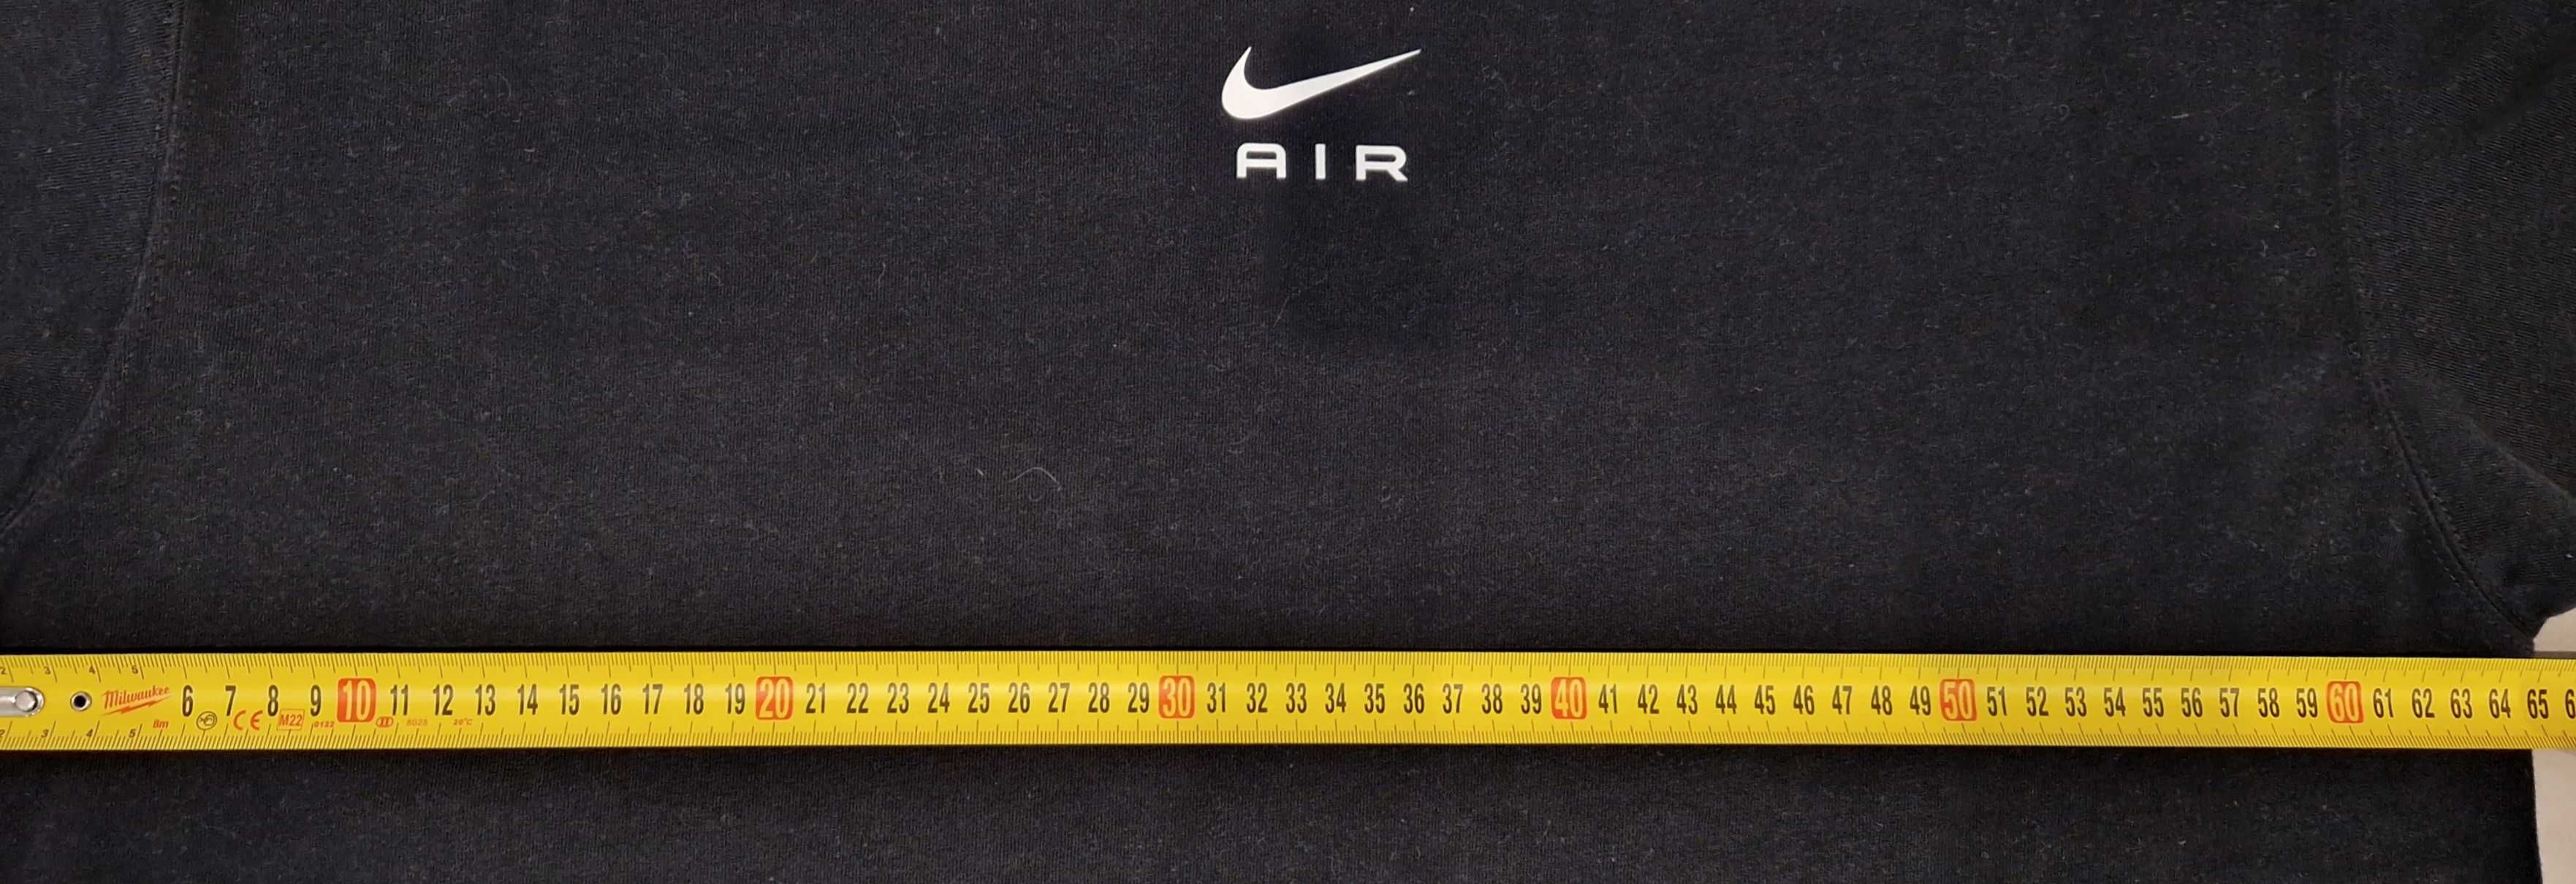 Koszulka męska Nike AIR XL